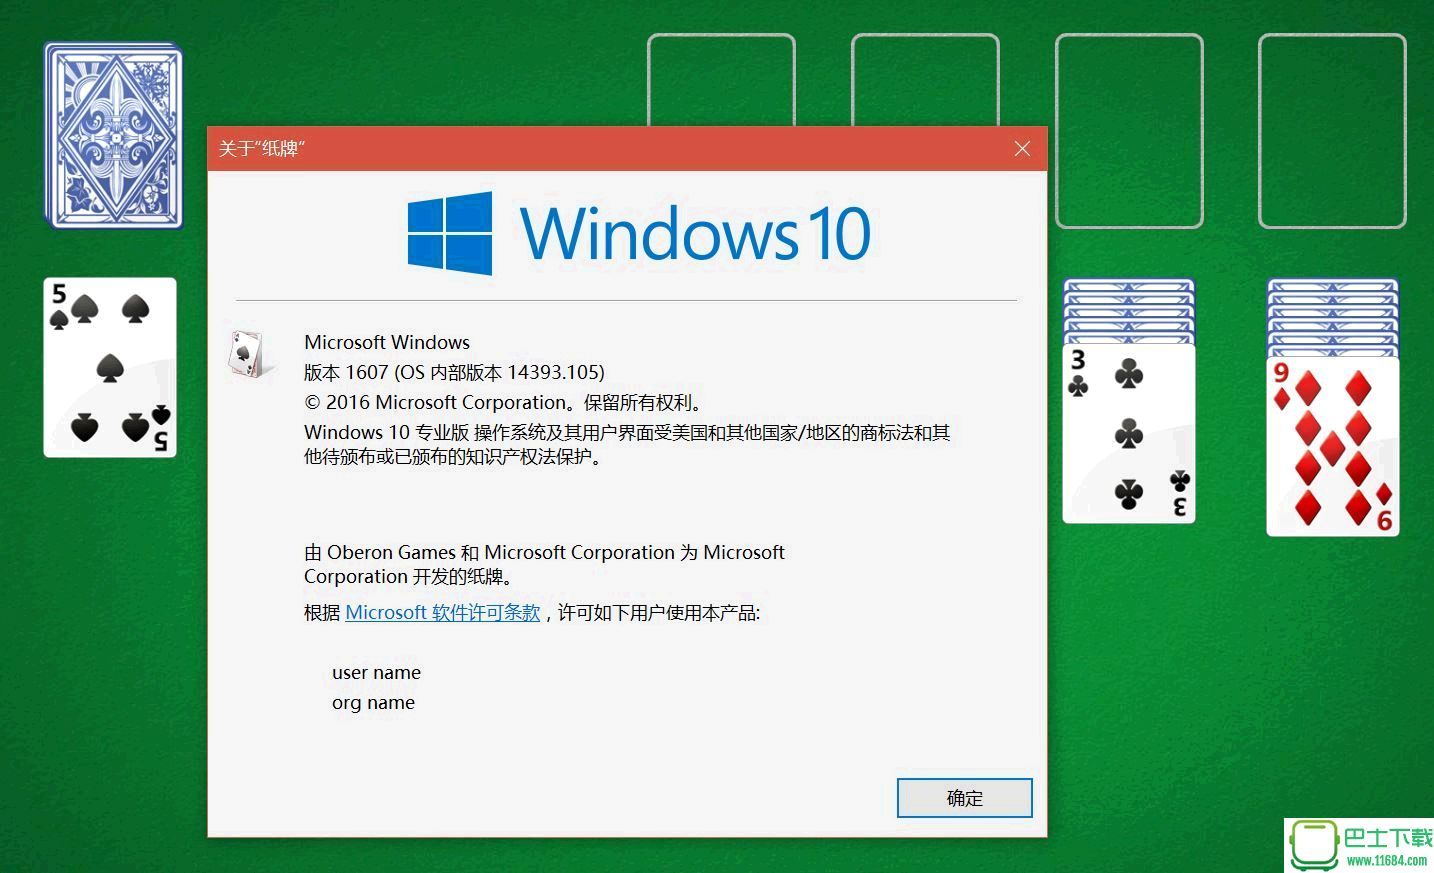 Windows7GamesforWindows10and8Win7扫雷红心大战等经典老）下载-Windows 7 Games for Windows 10 and 8 v2下载v2